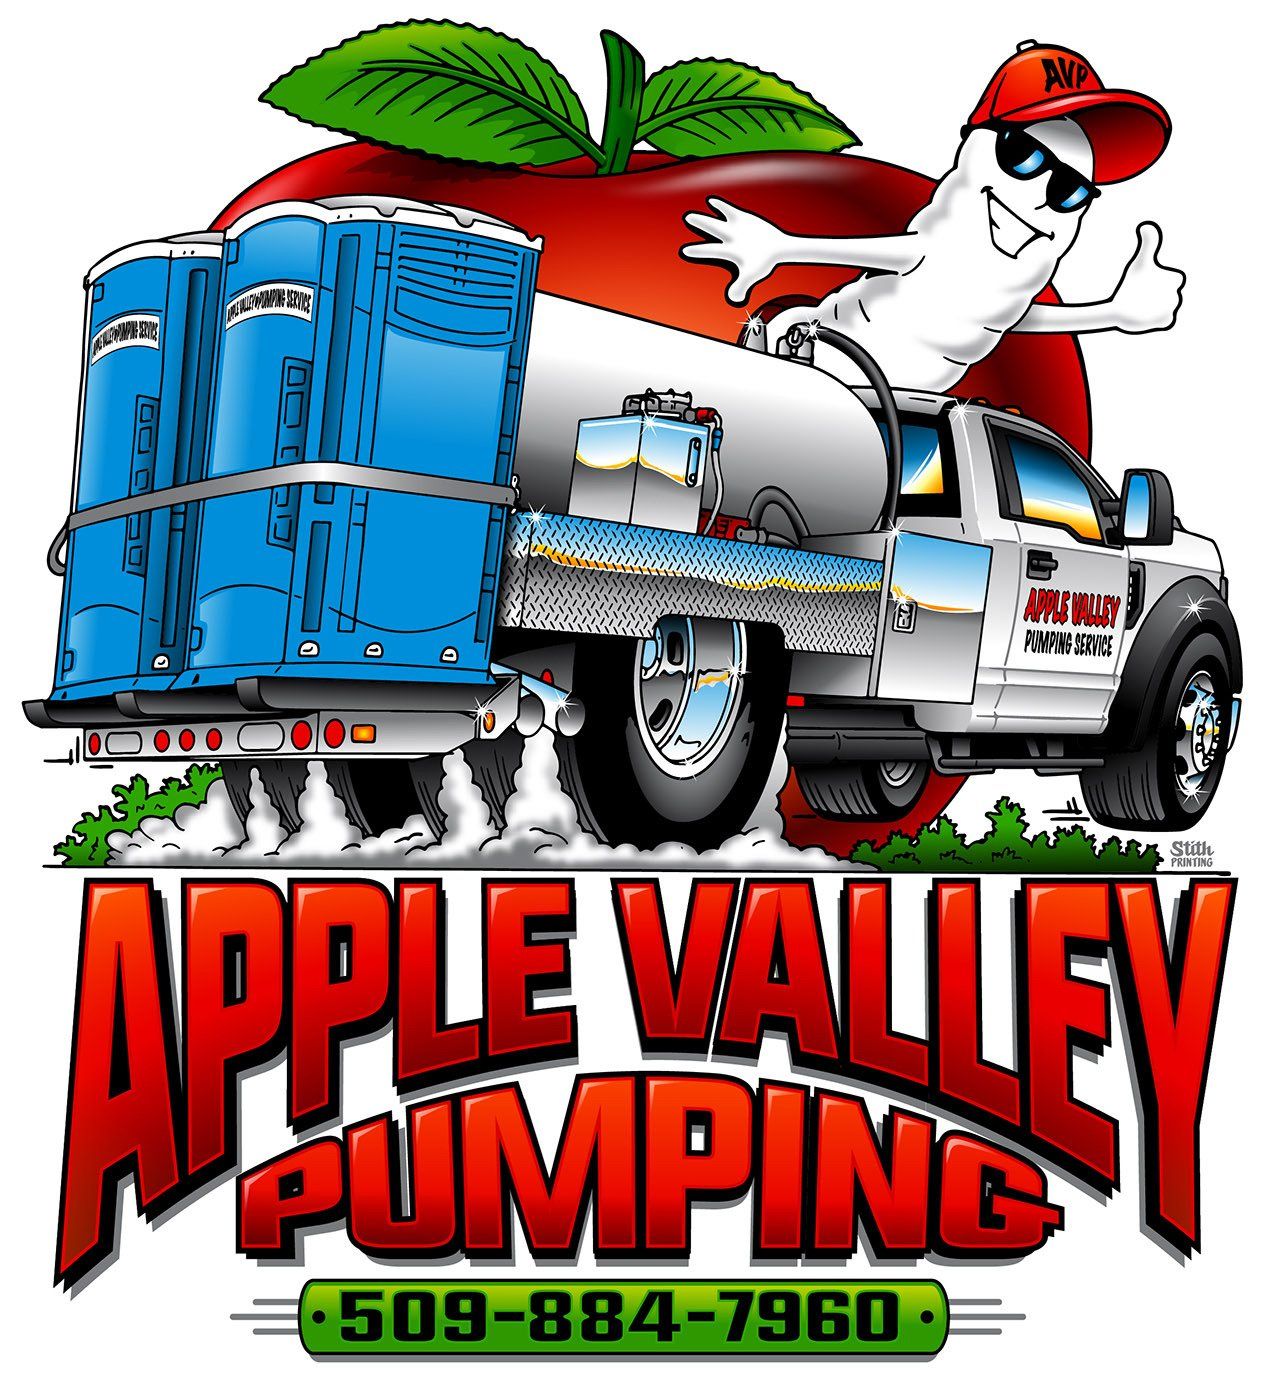 Apple Valley Pumping